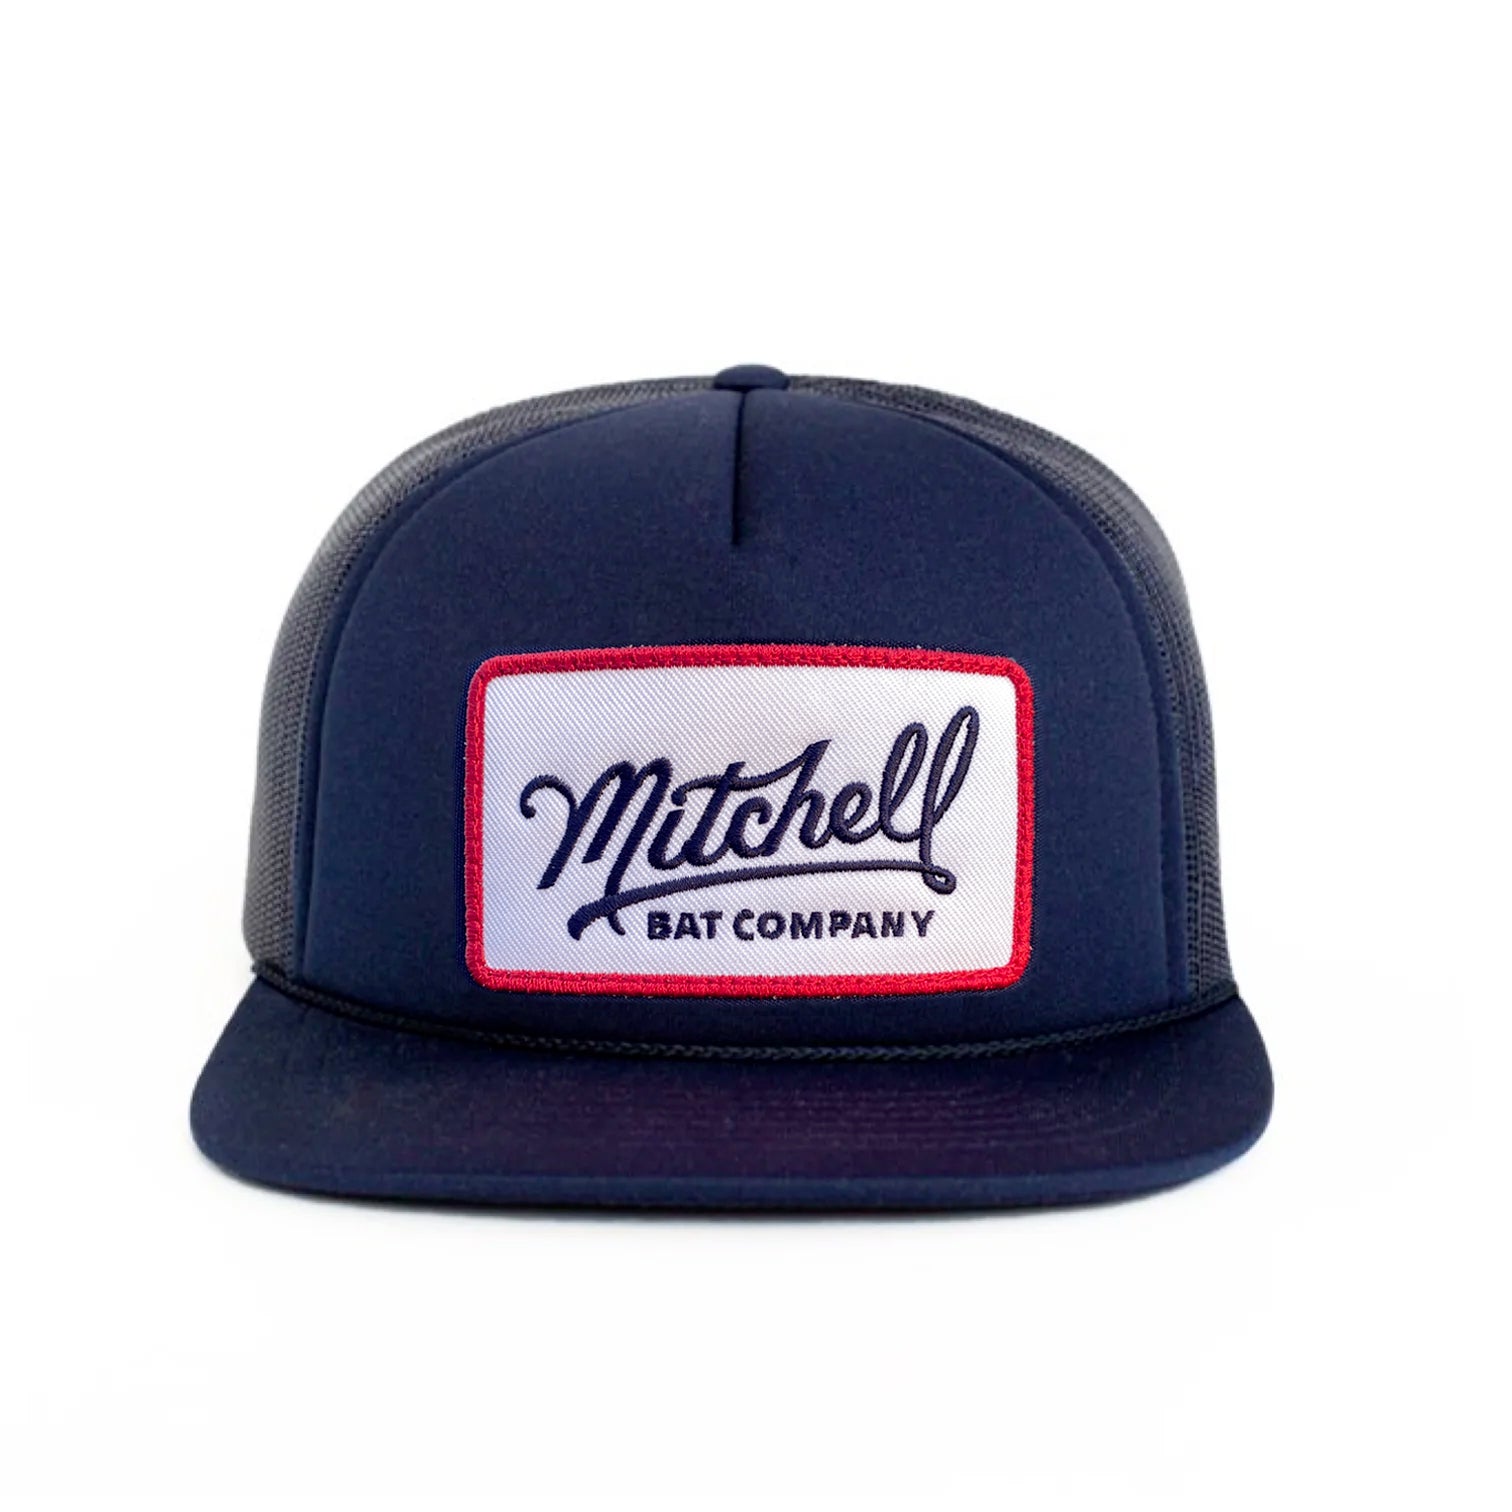 Mitchell Bat Co. Mesh Cap - white patch